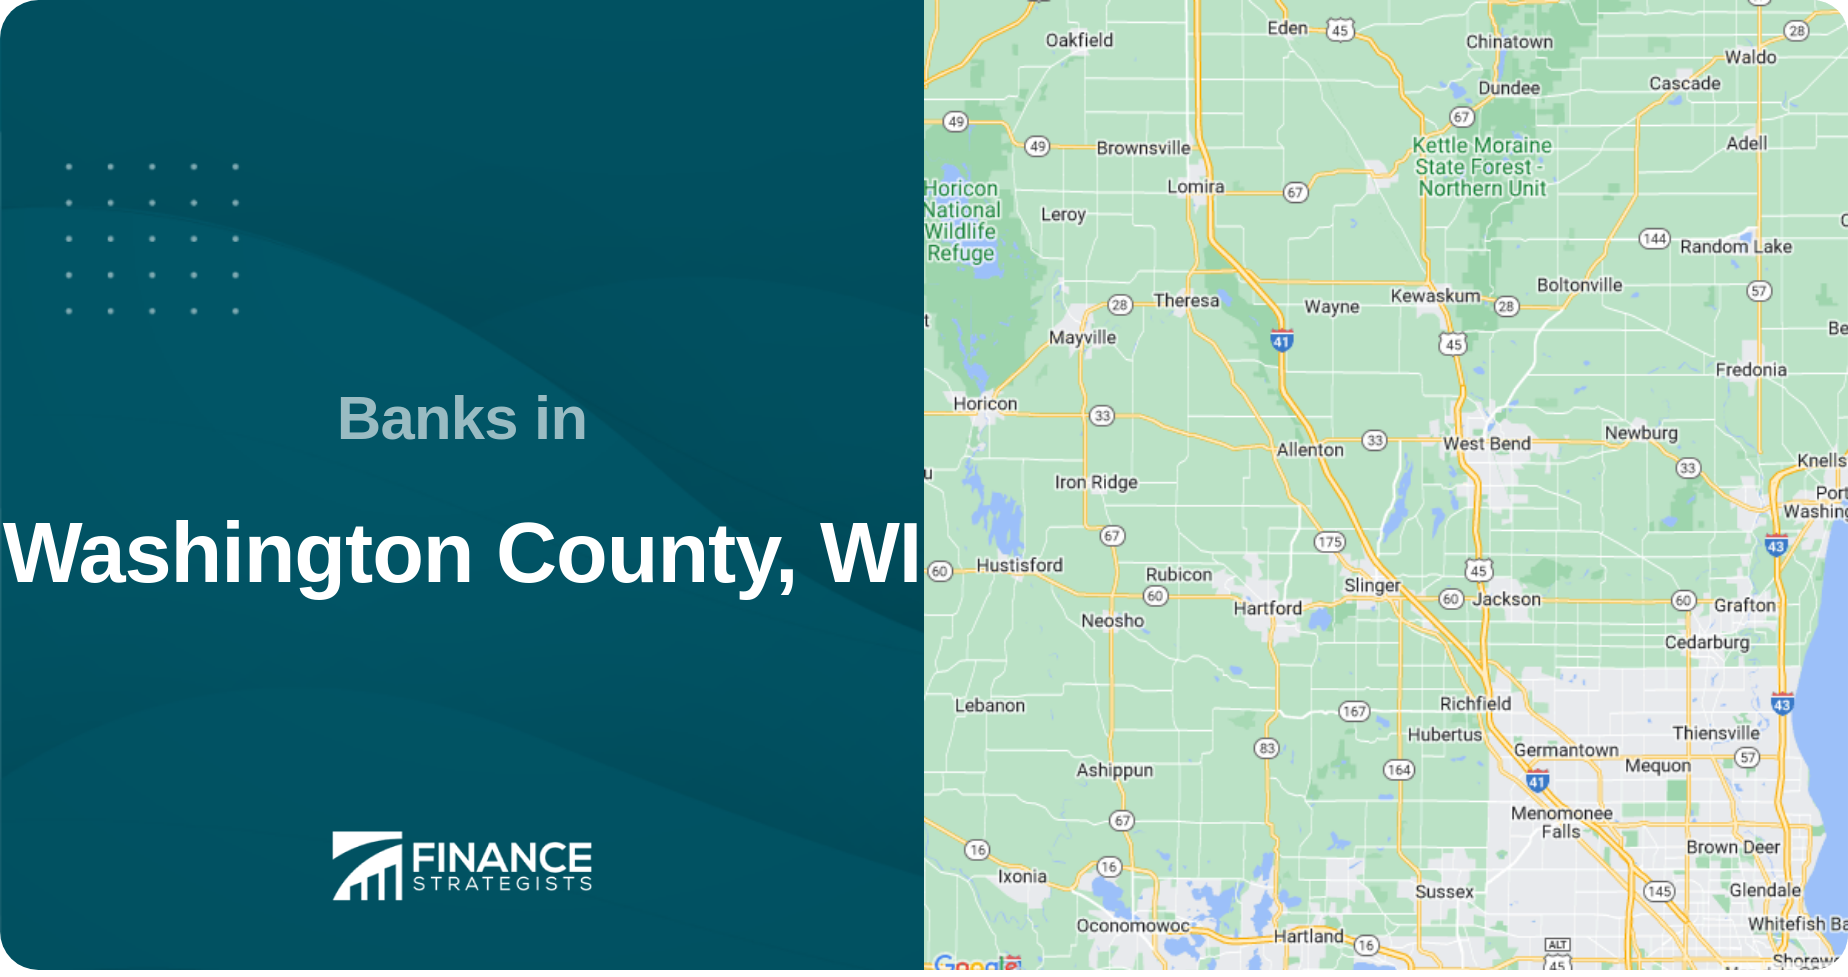 Banks in Washington County, WI